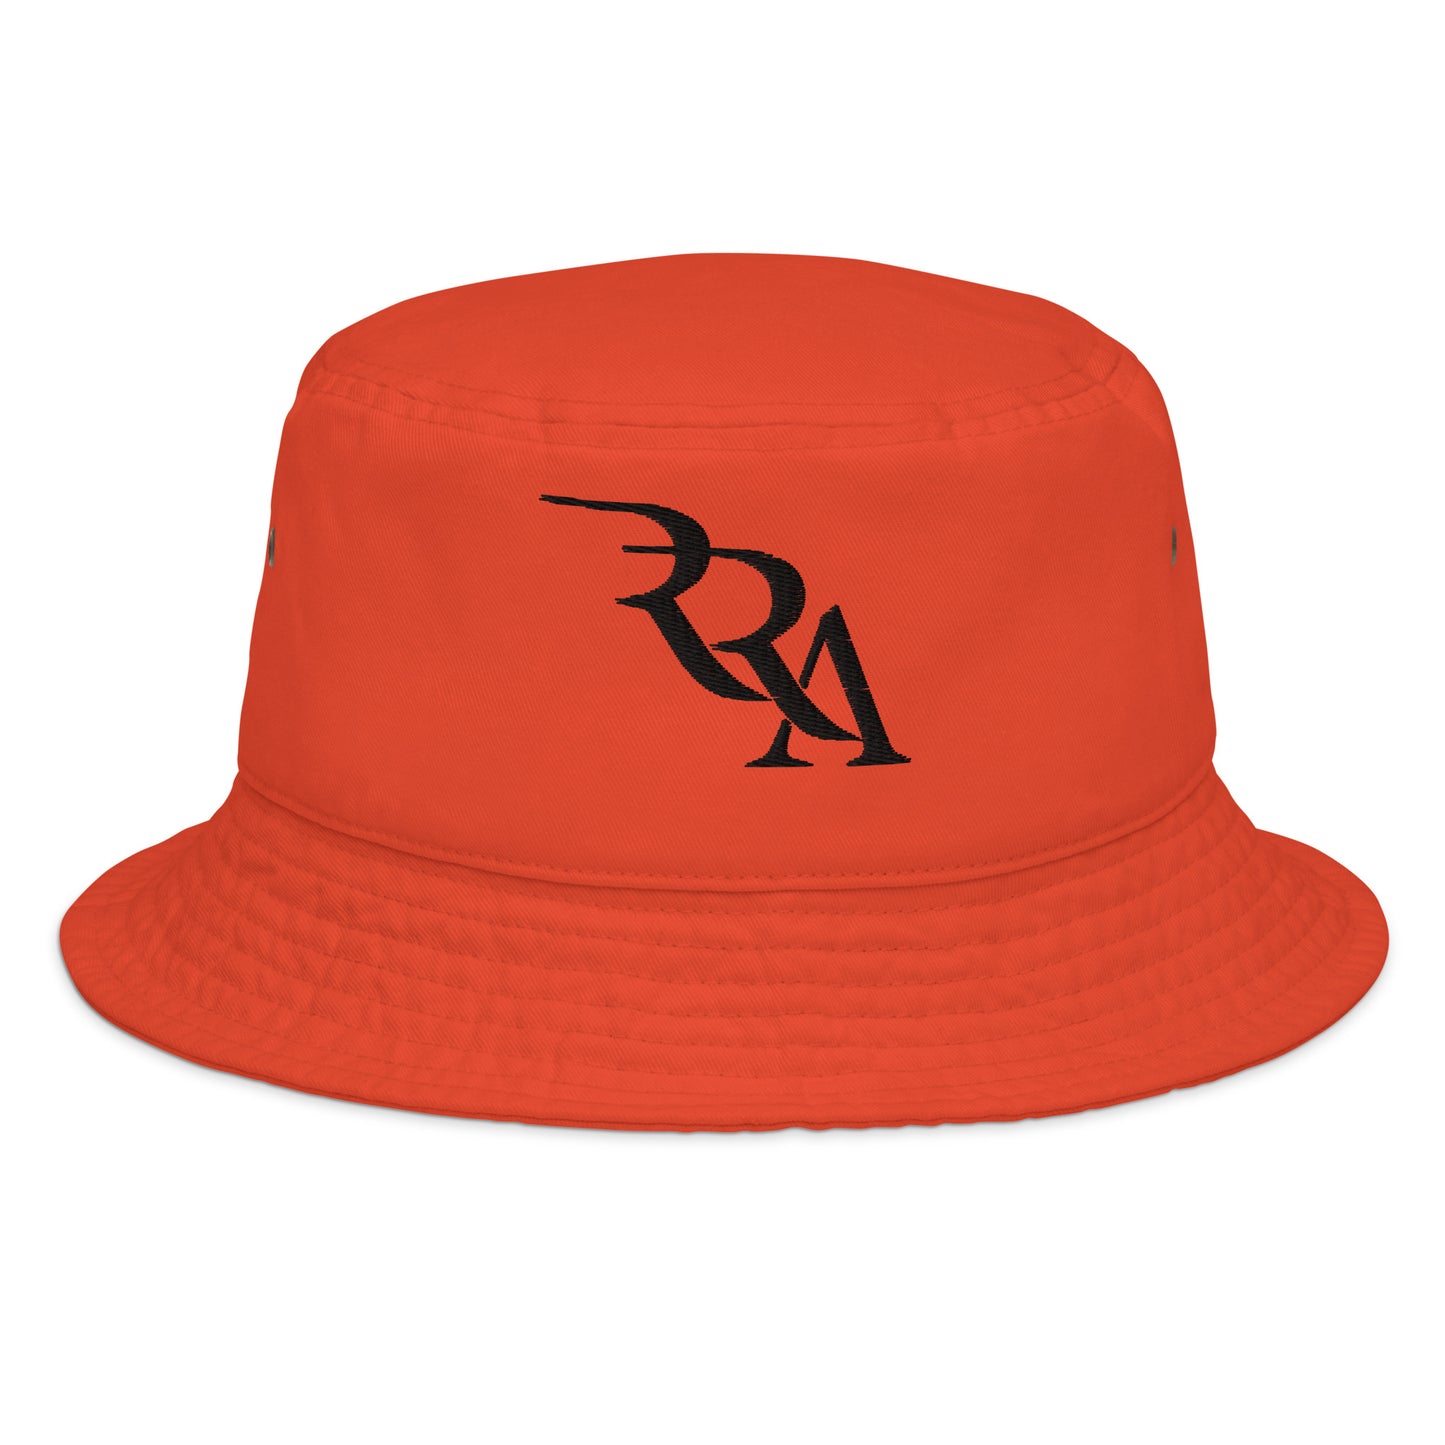 RRA - Black Fashion bucket hat